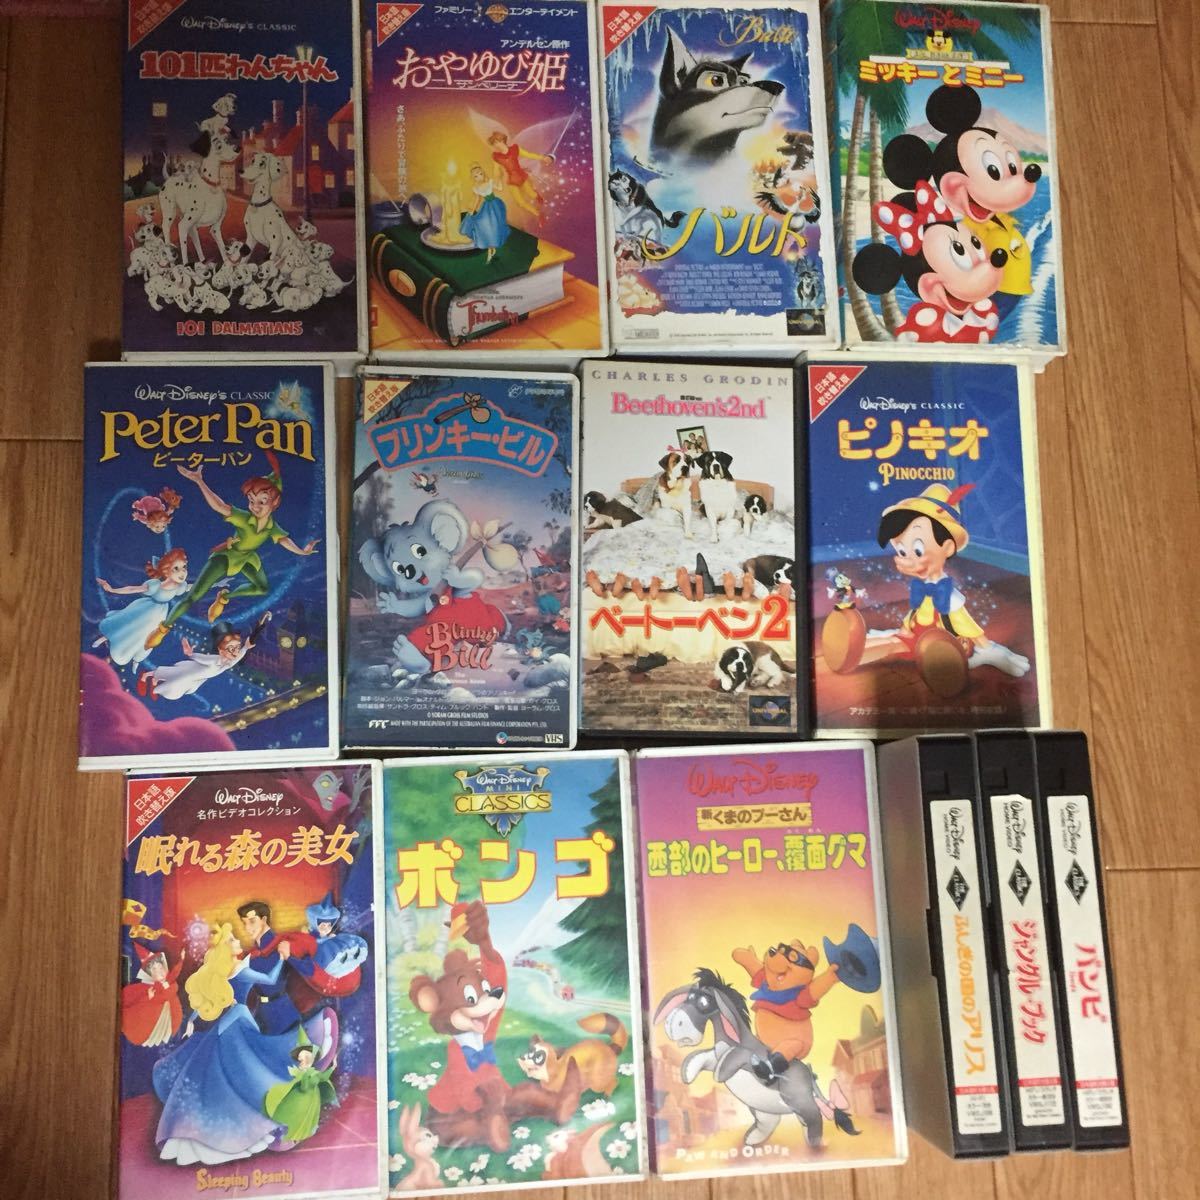 【VHS】VHSビデオソフト ディズニー系 13タイトル セット USED